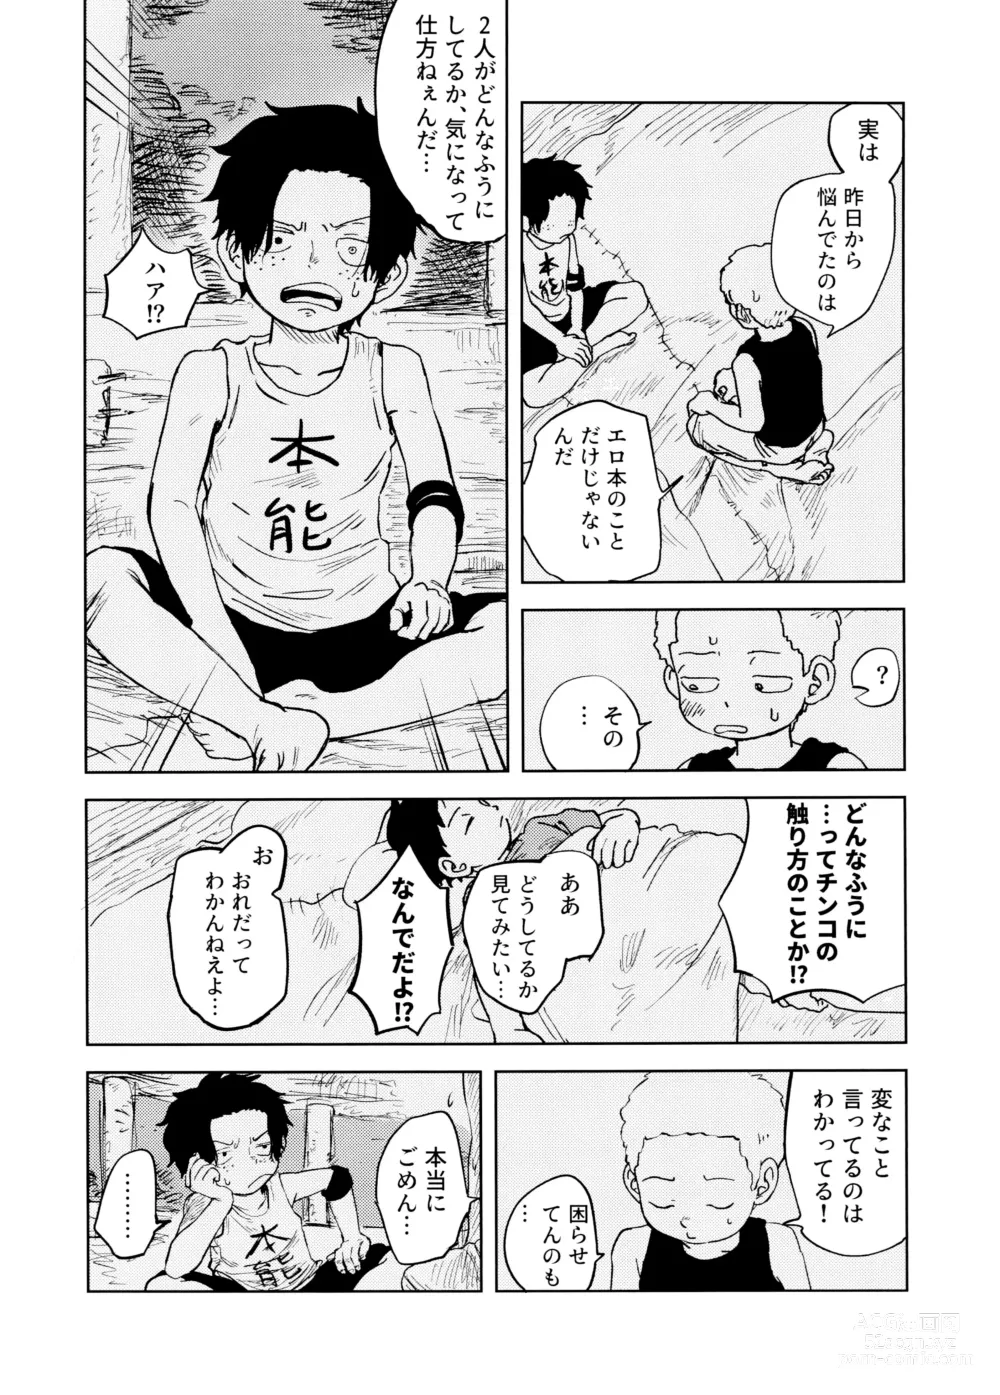 Page 30 of doujinshi Himitsu no Colubo Yama